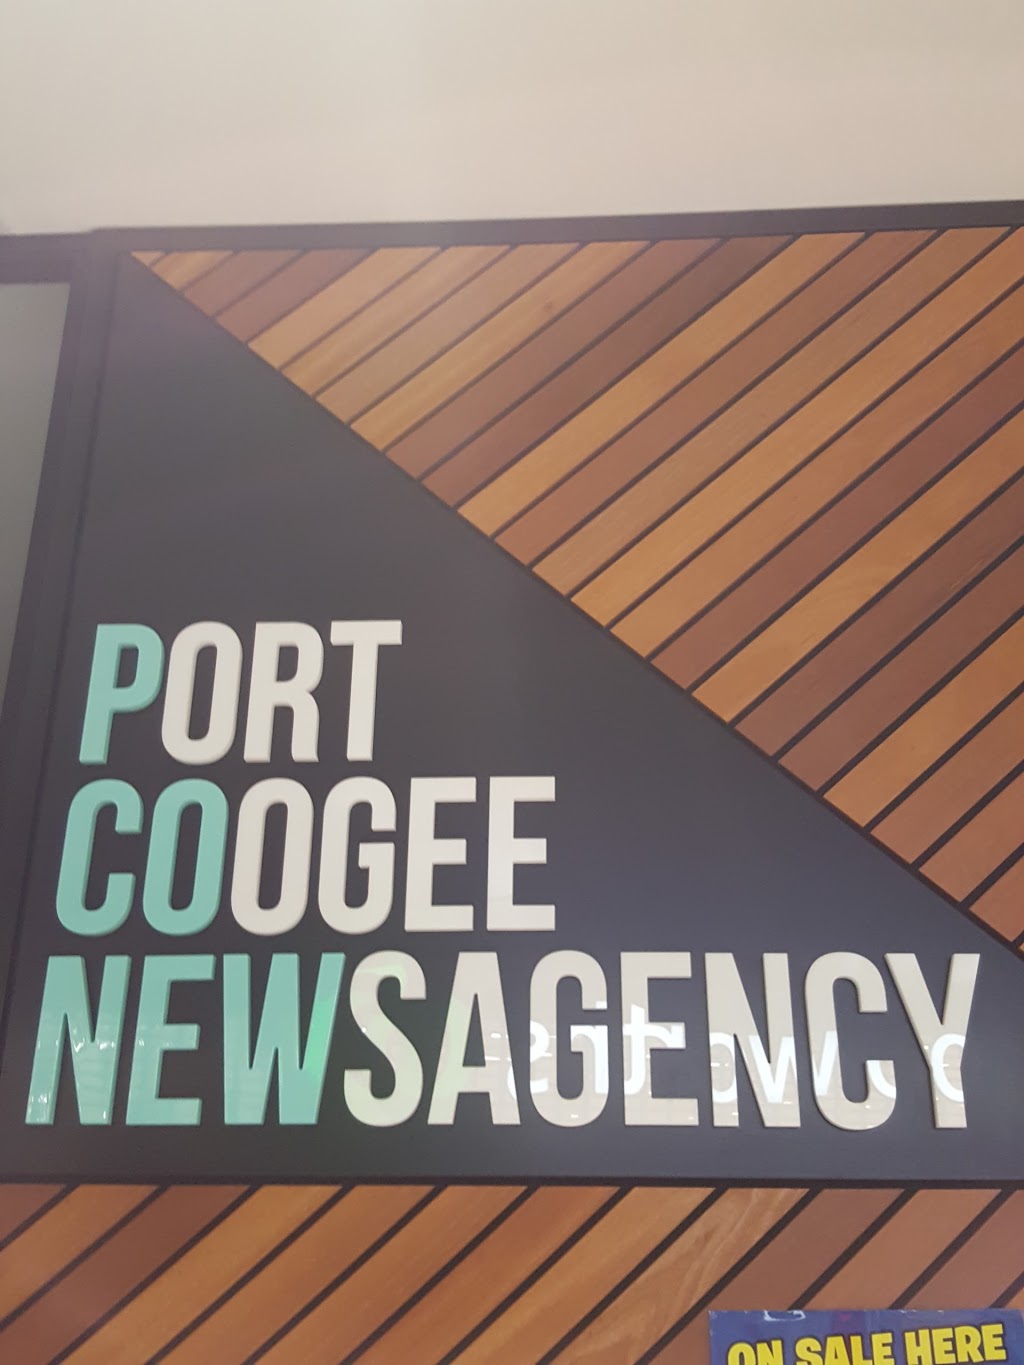 Port Coogee News Agency | 64 Orsino Blvd, North Coogee WA 6163, Australia